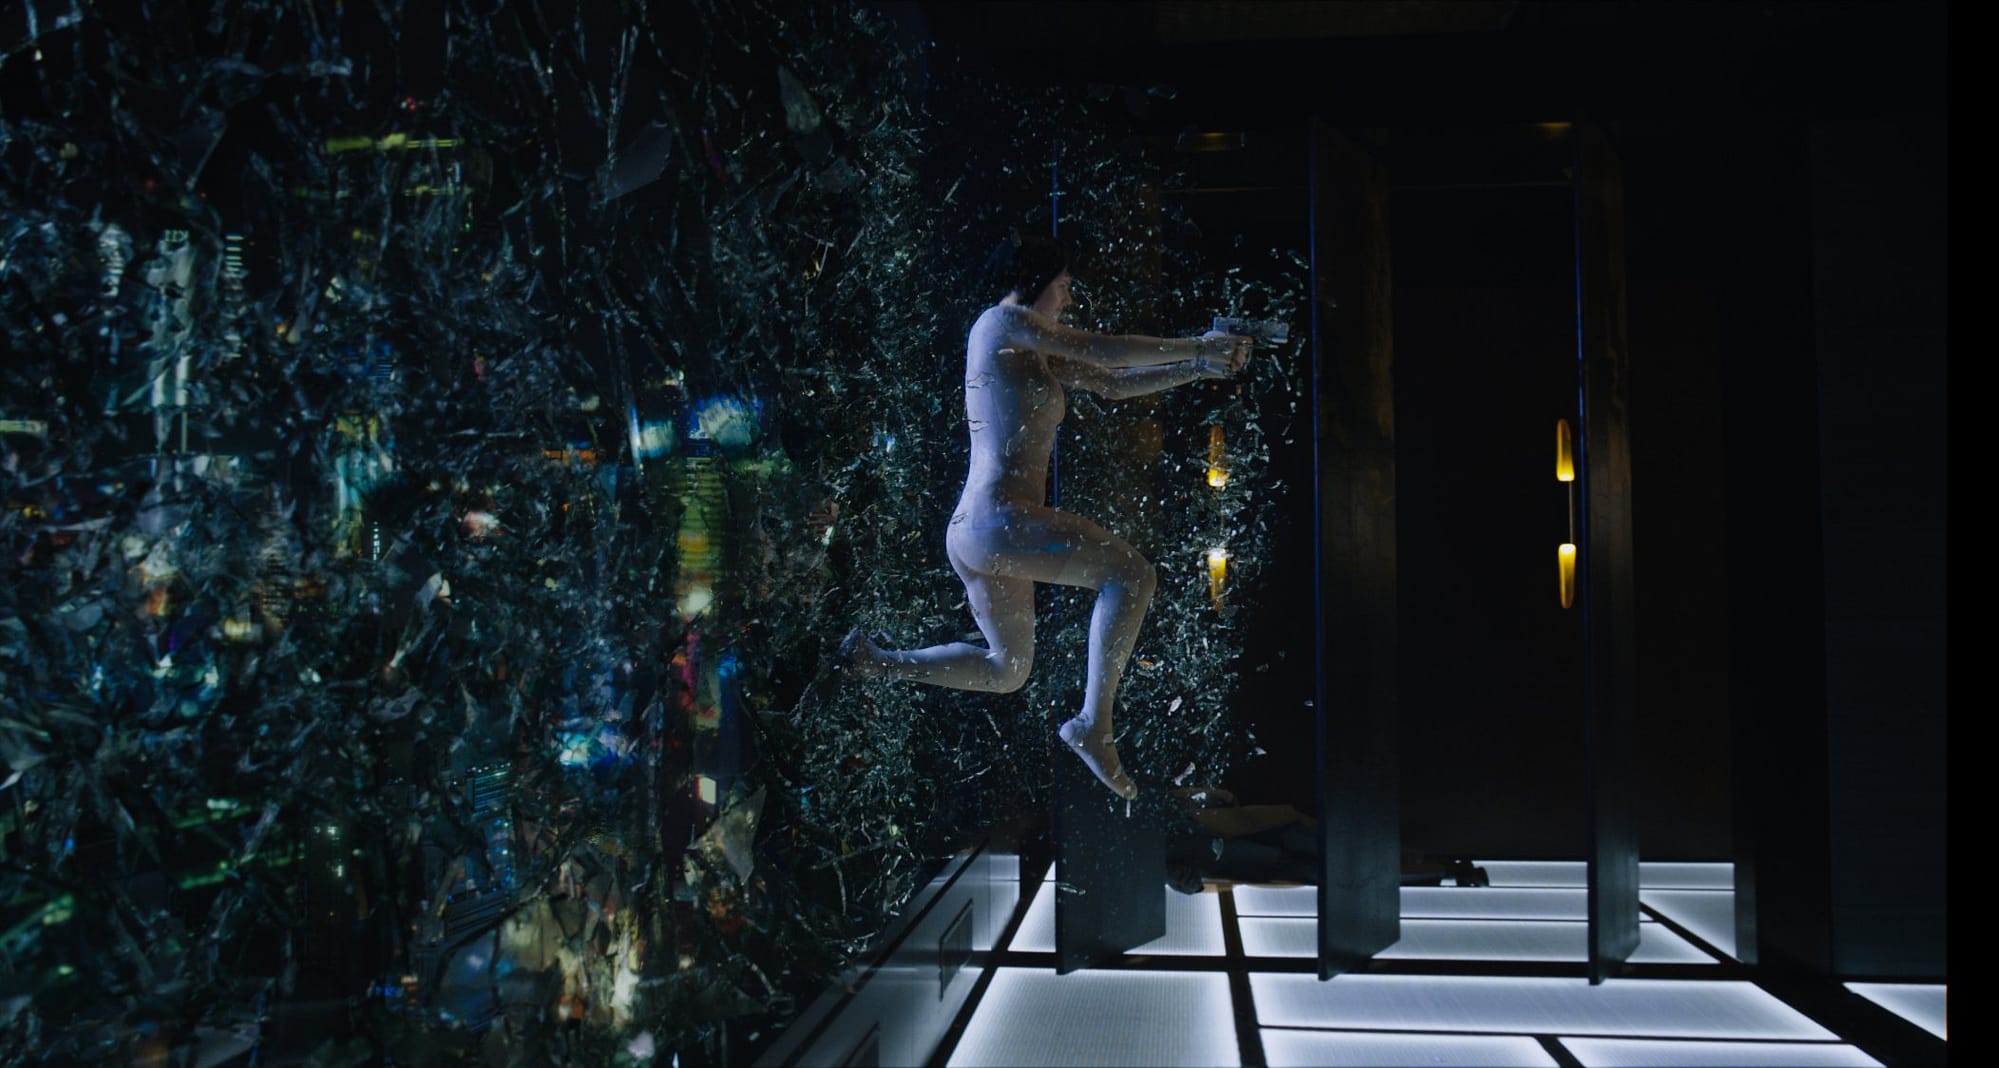 Scarlett Johansson jumps through a glass window shooting enemies